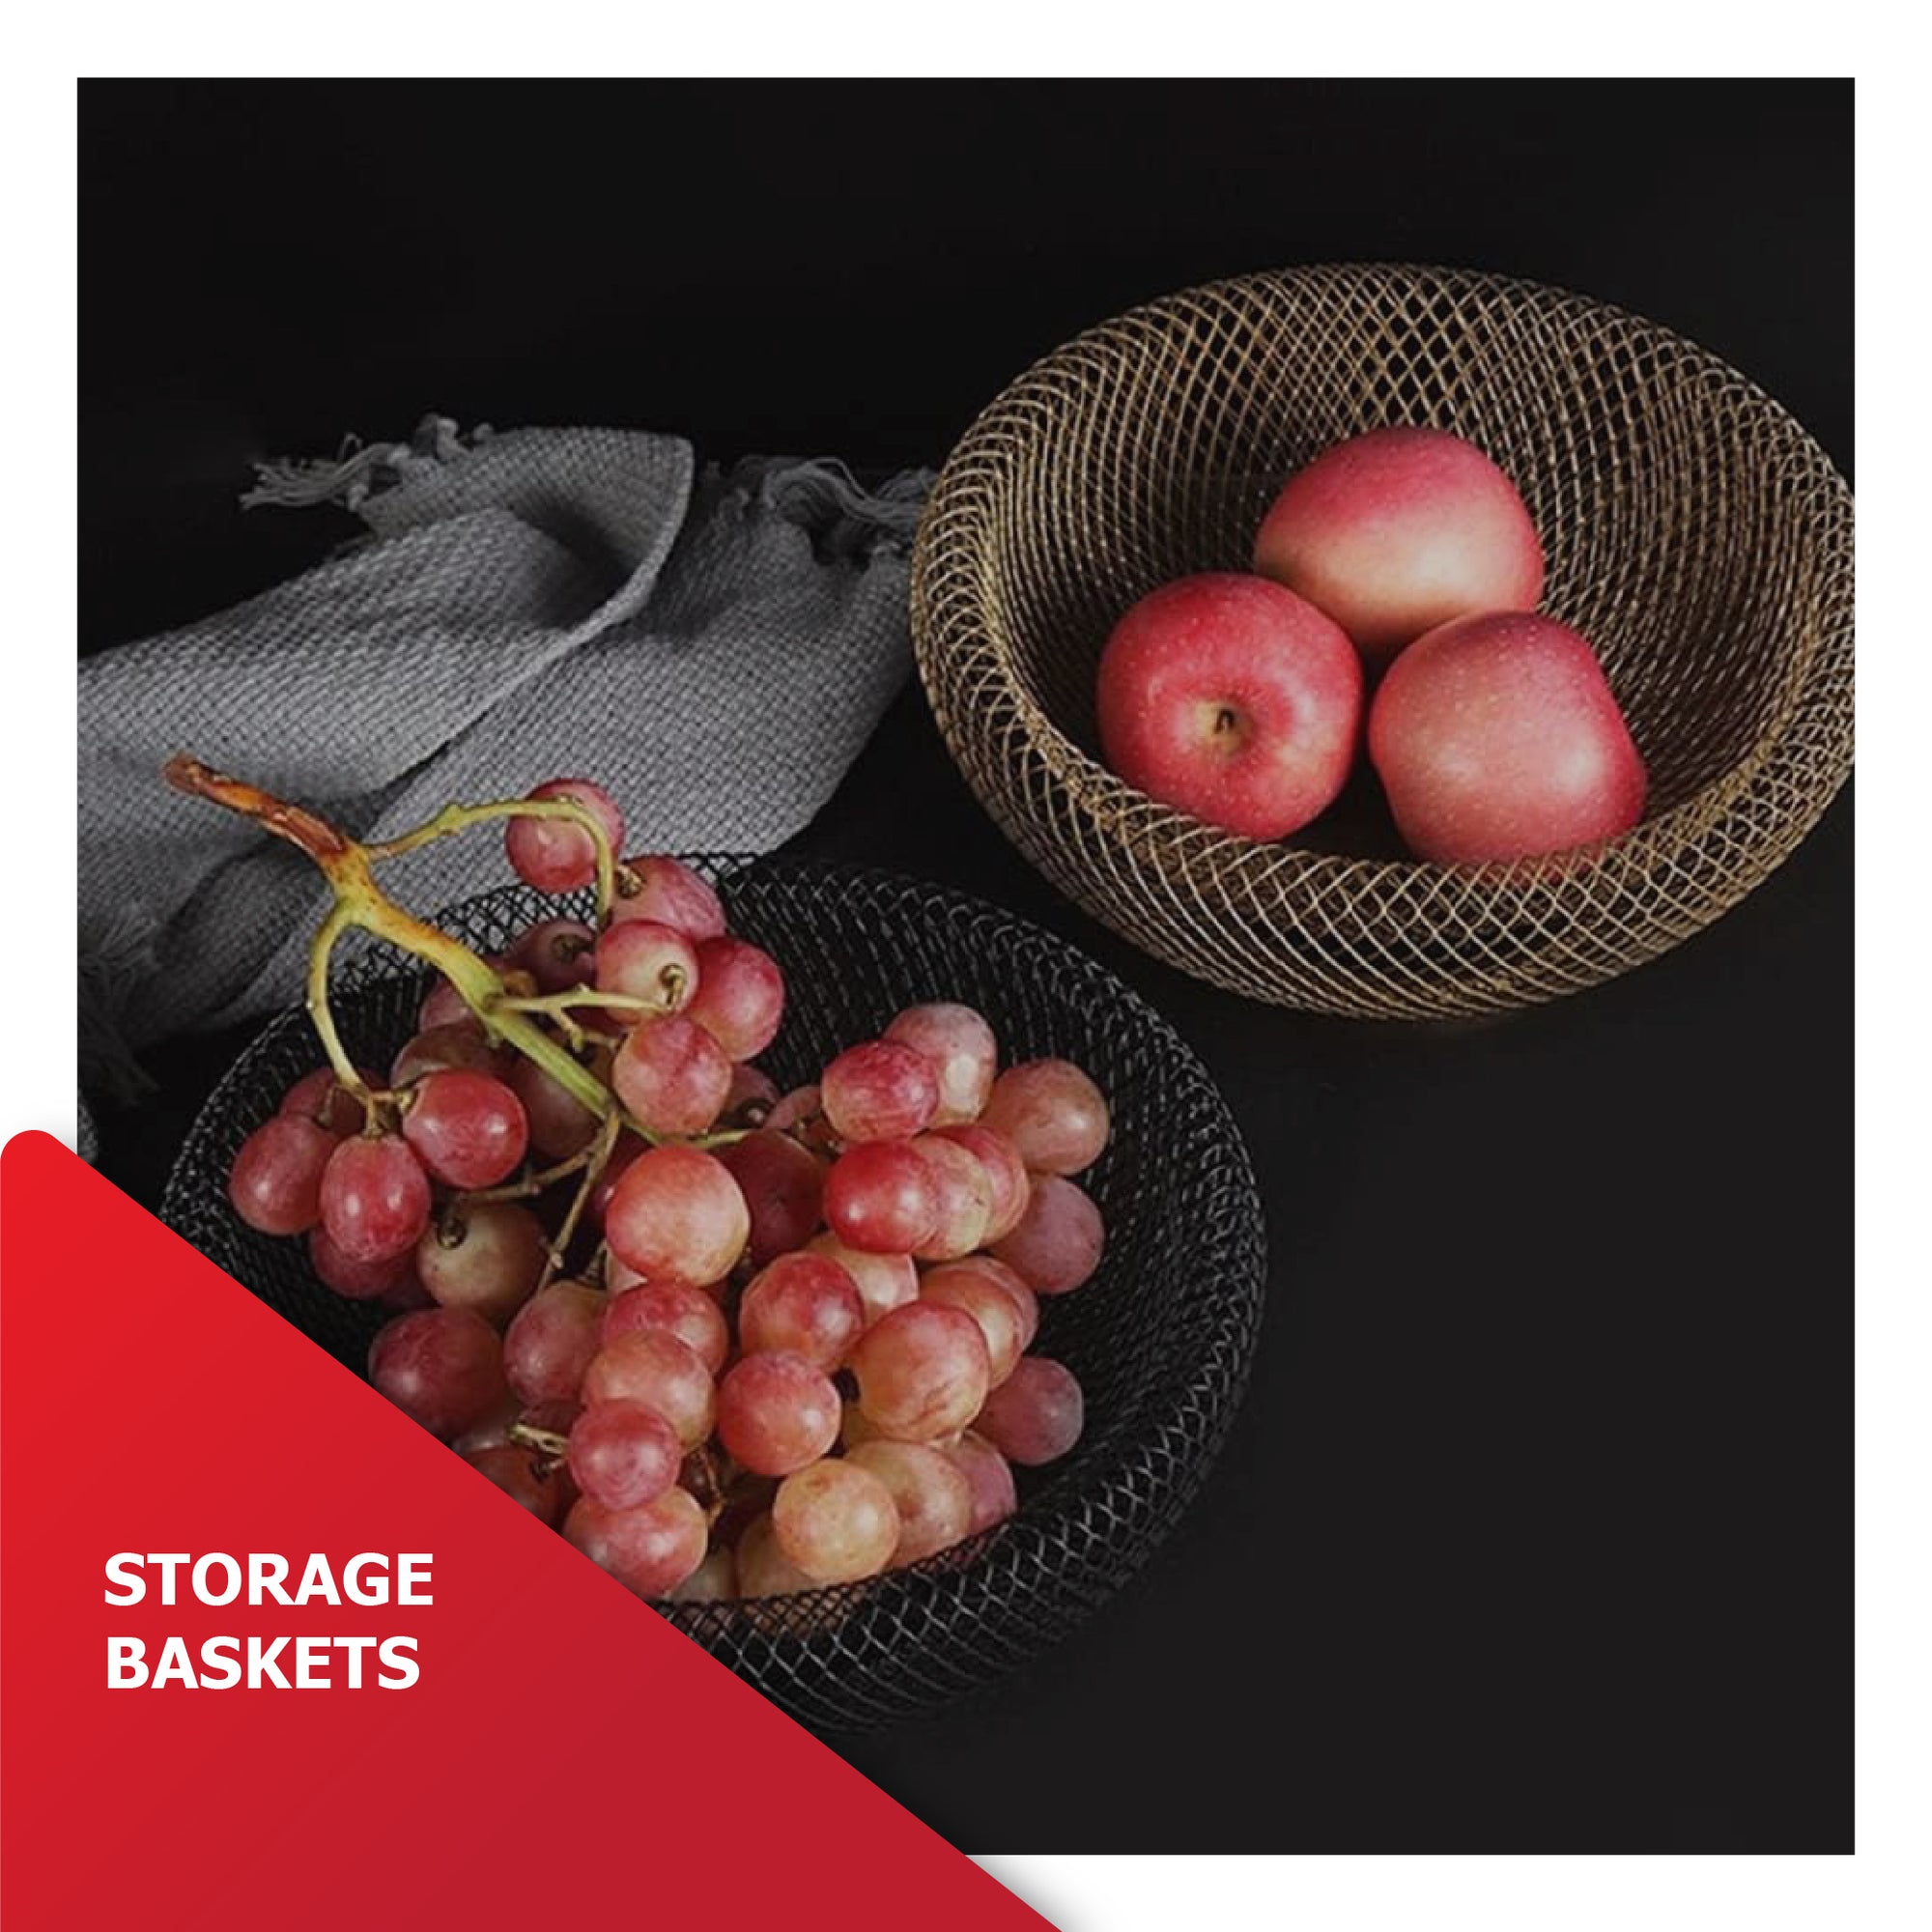 Storage Baskets | Category